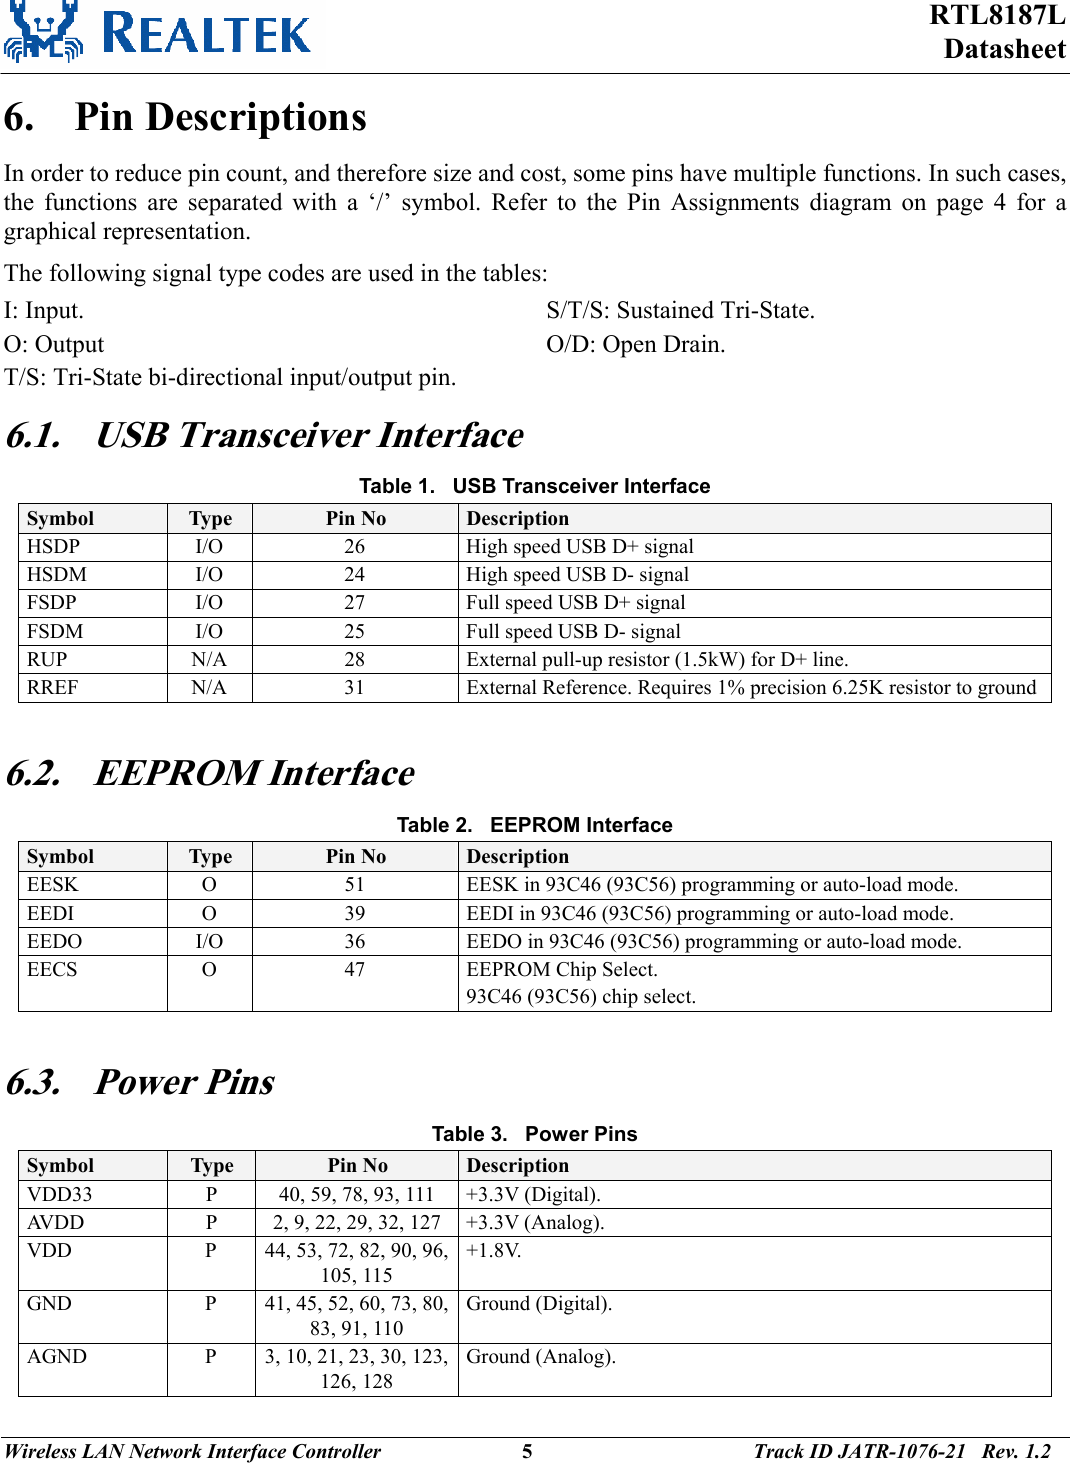 Realtek Semiconductor RTL8187 802.11b/g RTL8187 miniCard User Manual ...